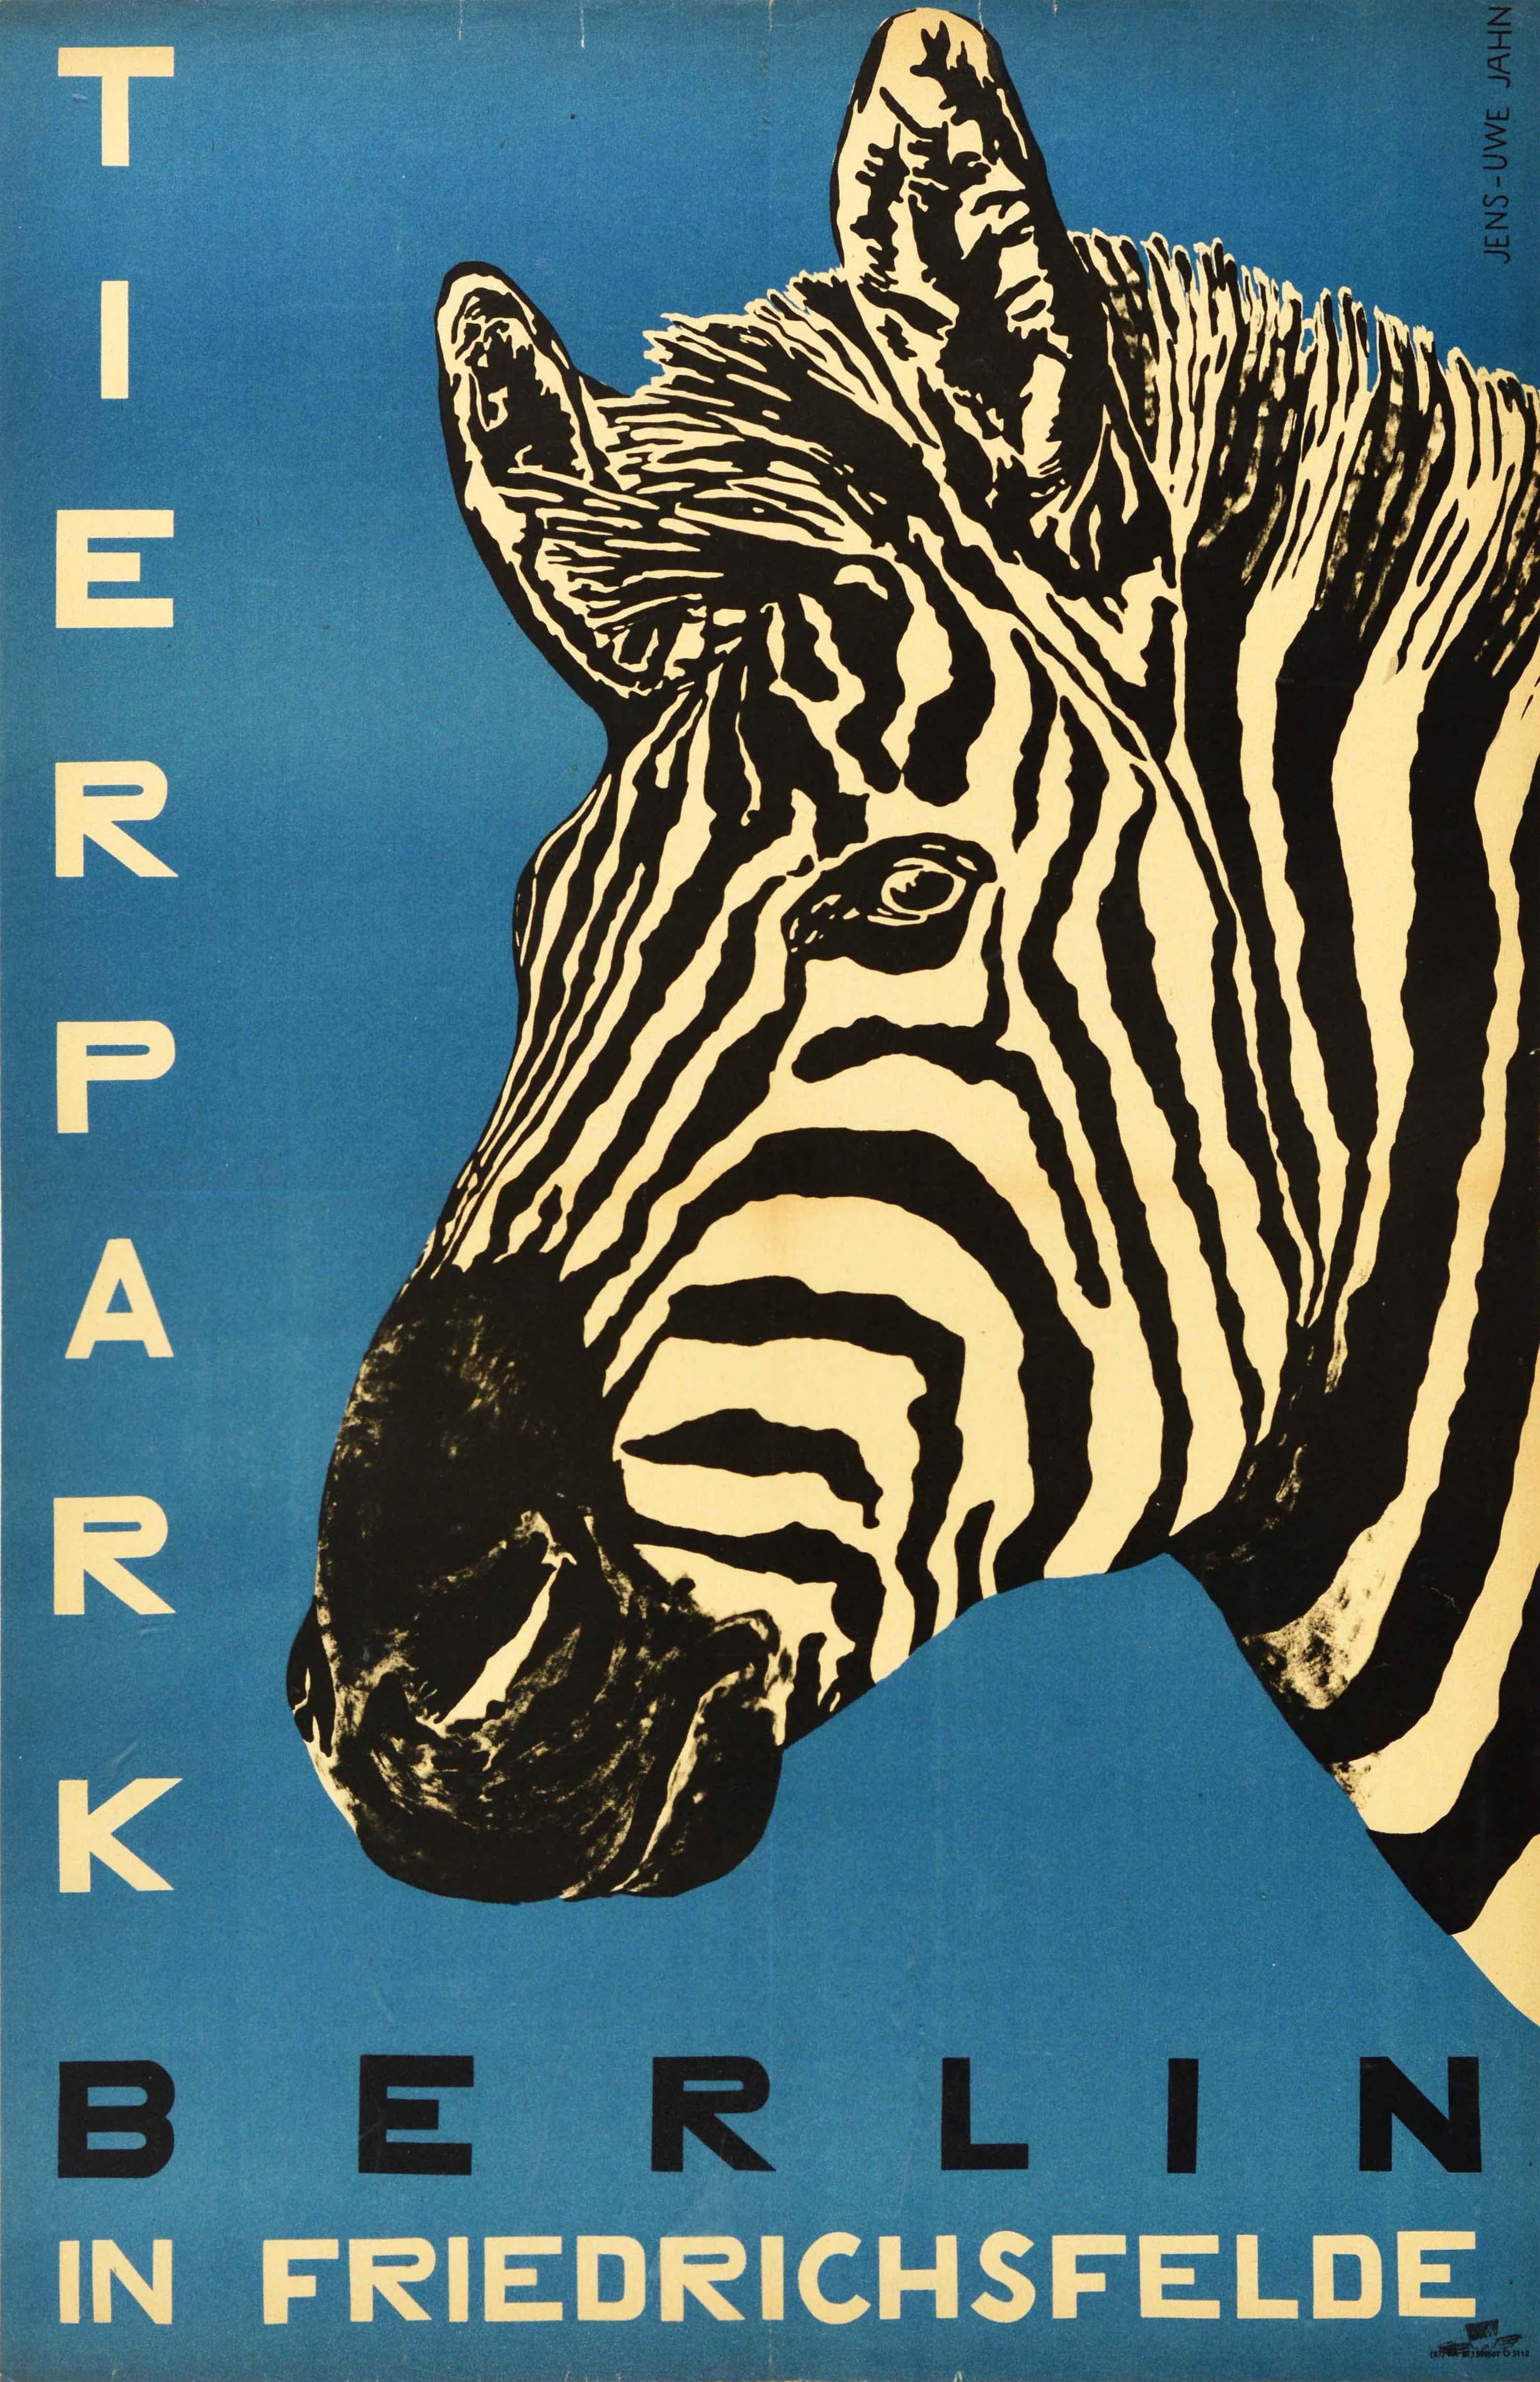 Jens-Uwe Jahn Print - Original Vintage Poster Tierpark Berlin Zoo Friedrichsfelde Germany Zebra Design